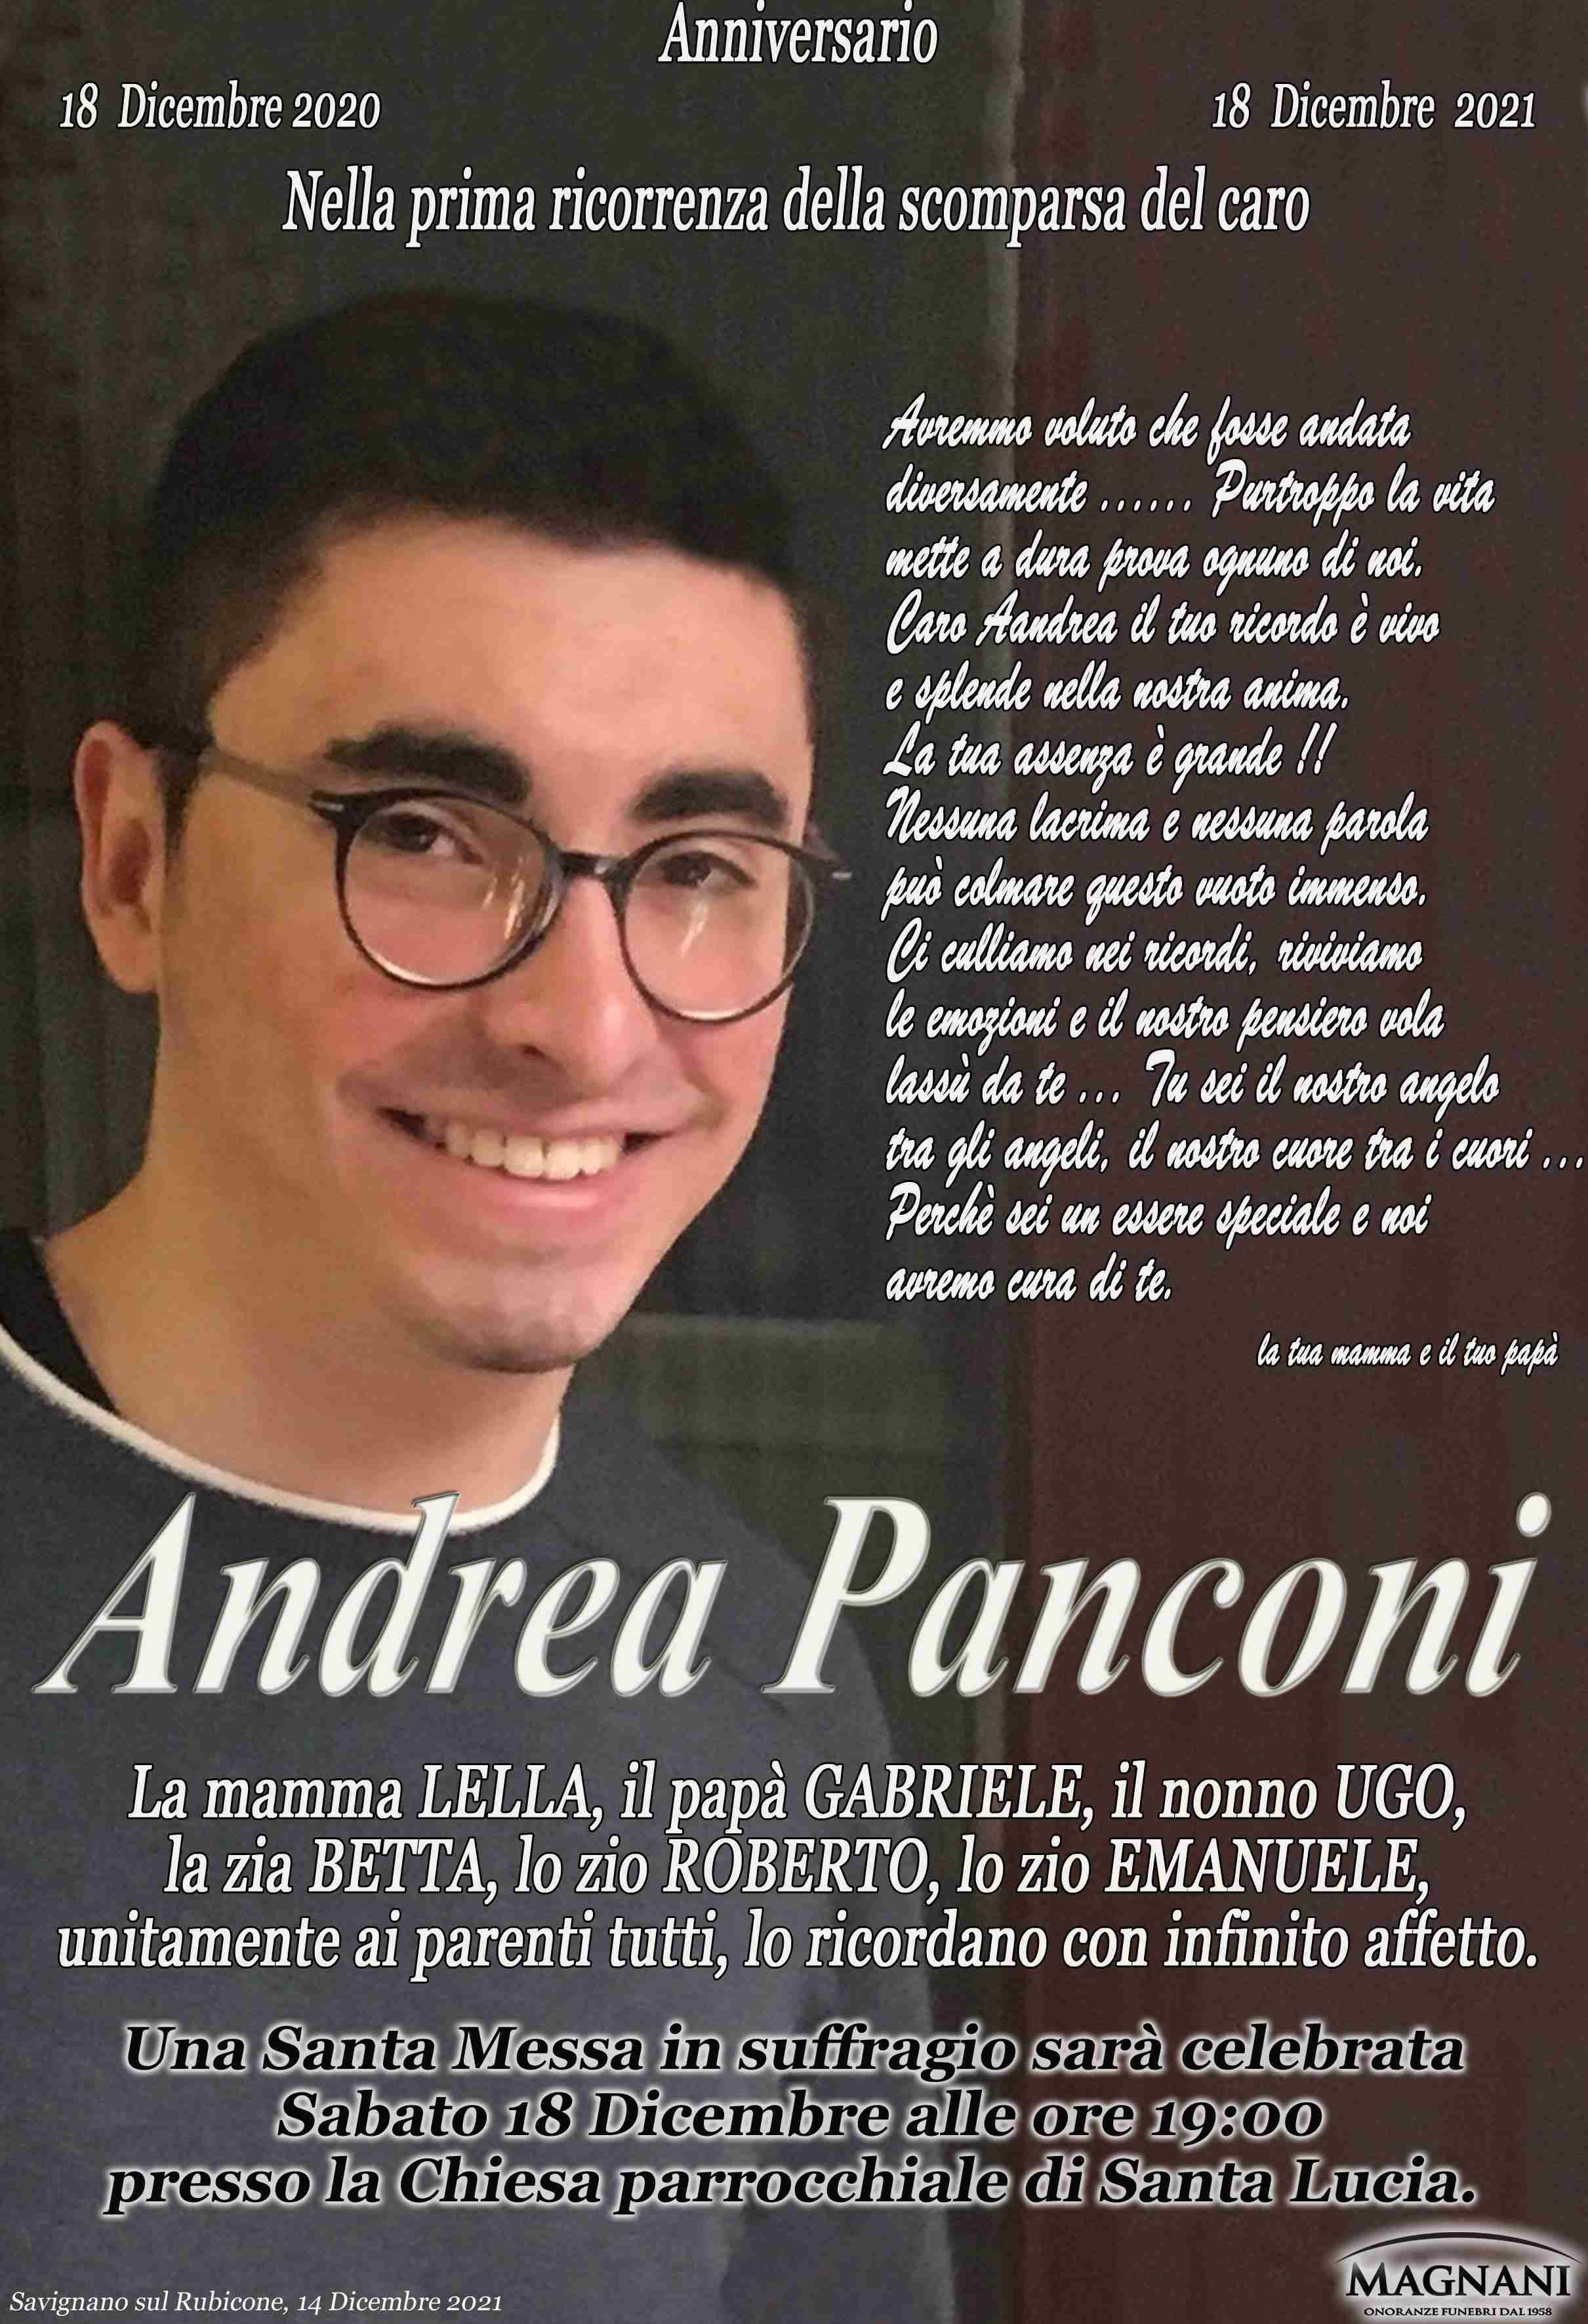 Andrea Panconi